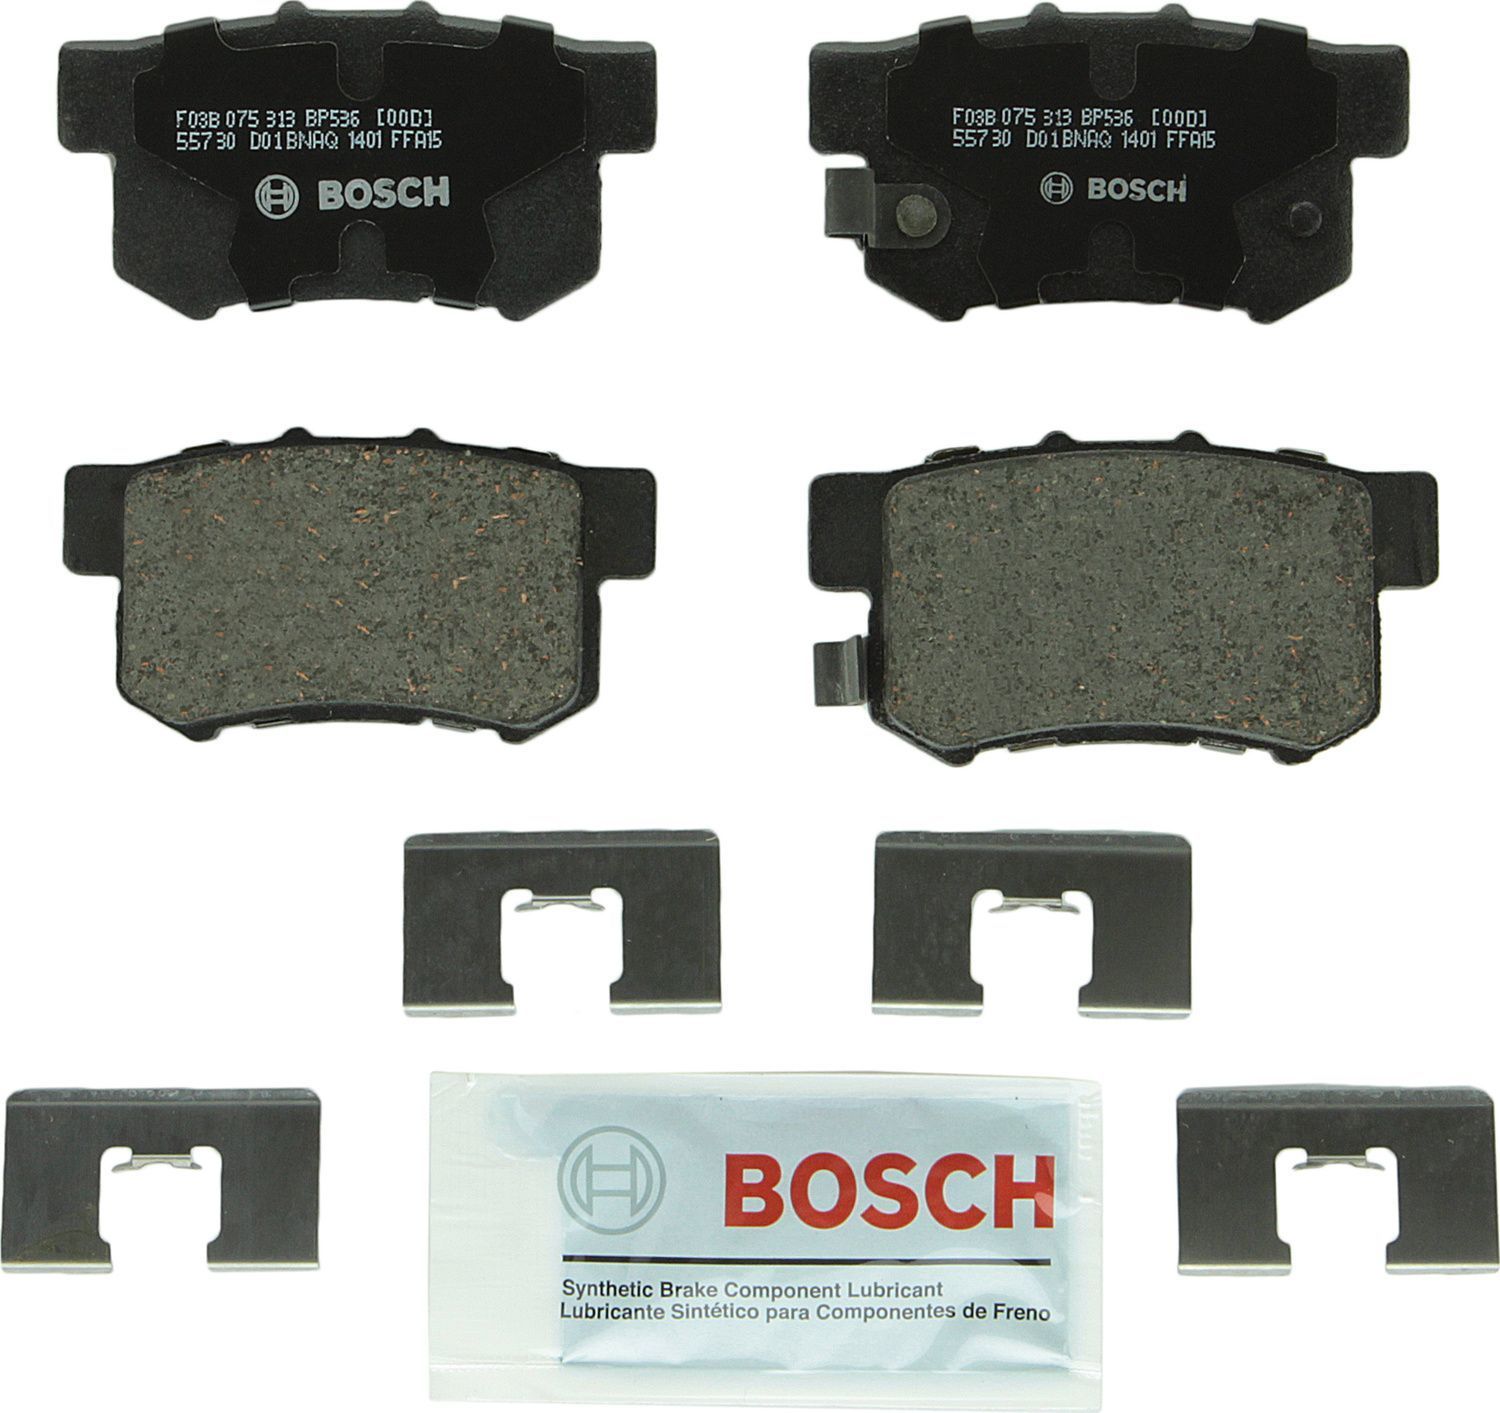 BOSCH BRAKE - Bosch QuietCast Brake Pad Ceramic Brake Pads (Rear) - BQC BP536